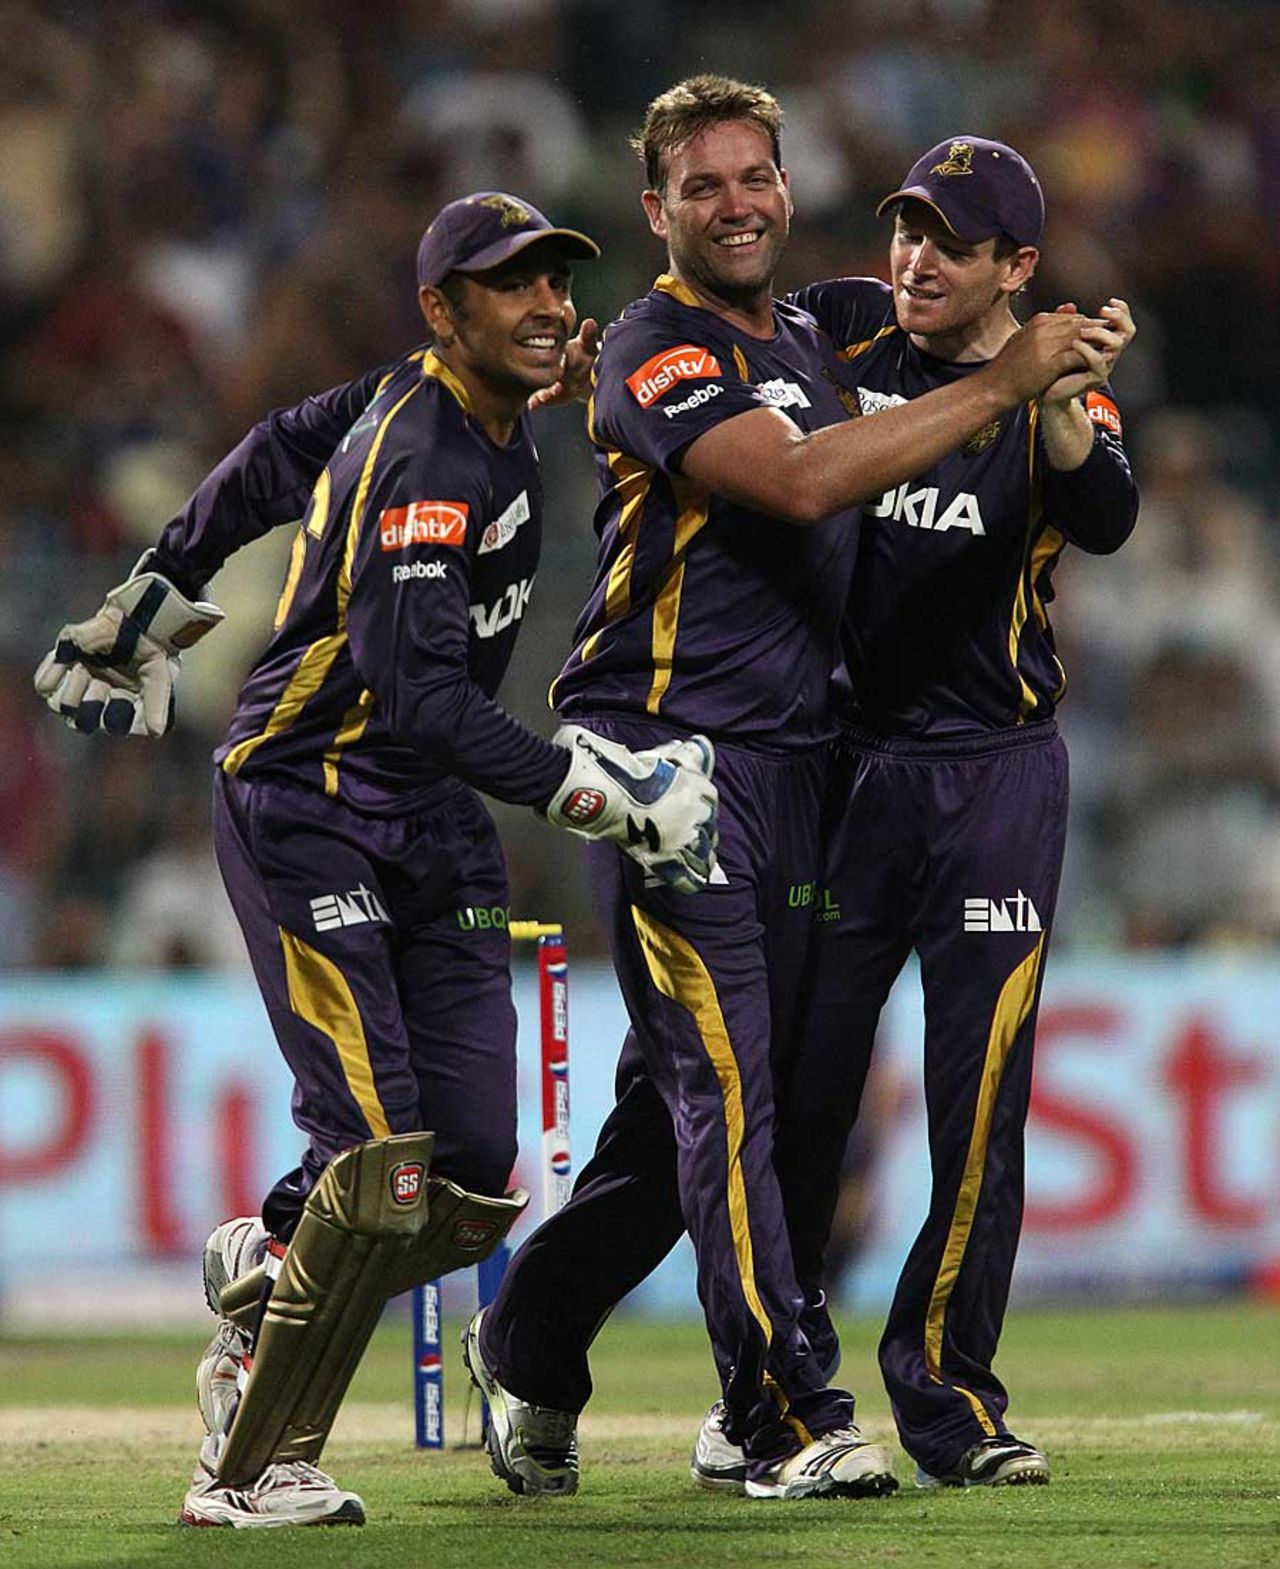 Jacques Kallis picked up three wickets in a miserly spell, Kolkata Knight Riders v Sunrisers Hyderabad, IPL, Kolkata, April 14, 2013